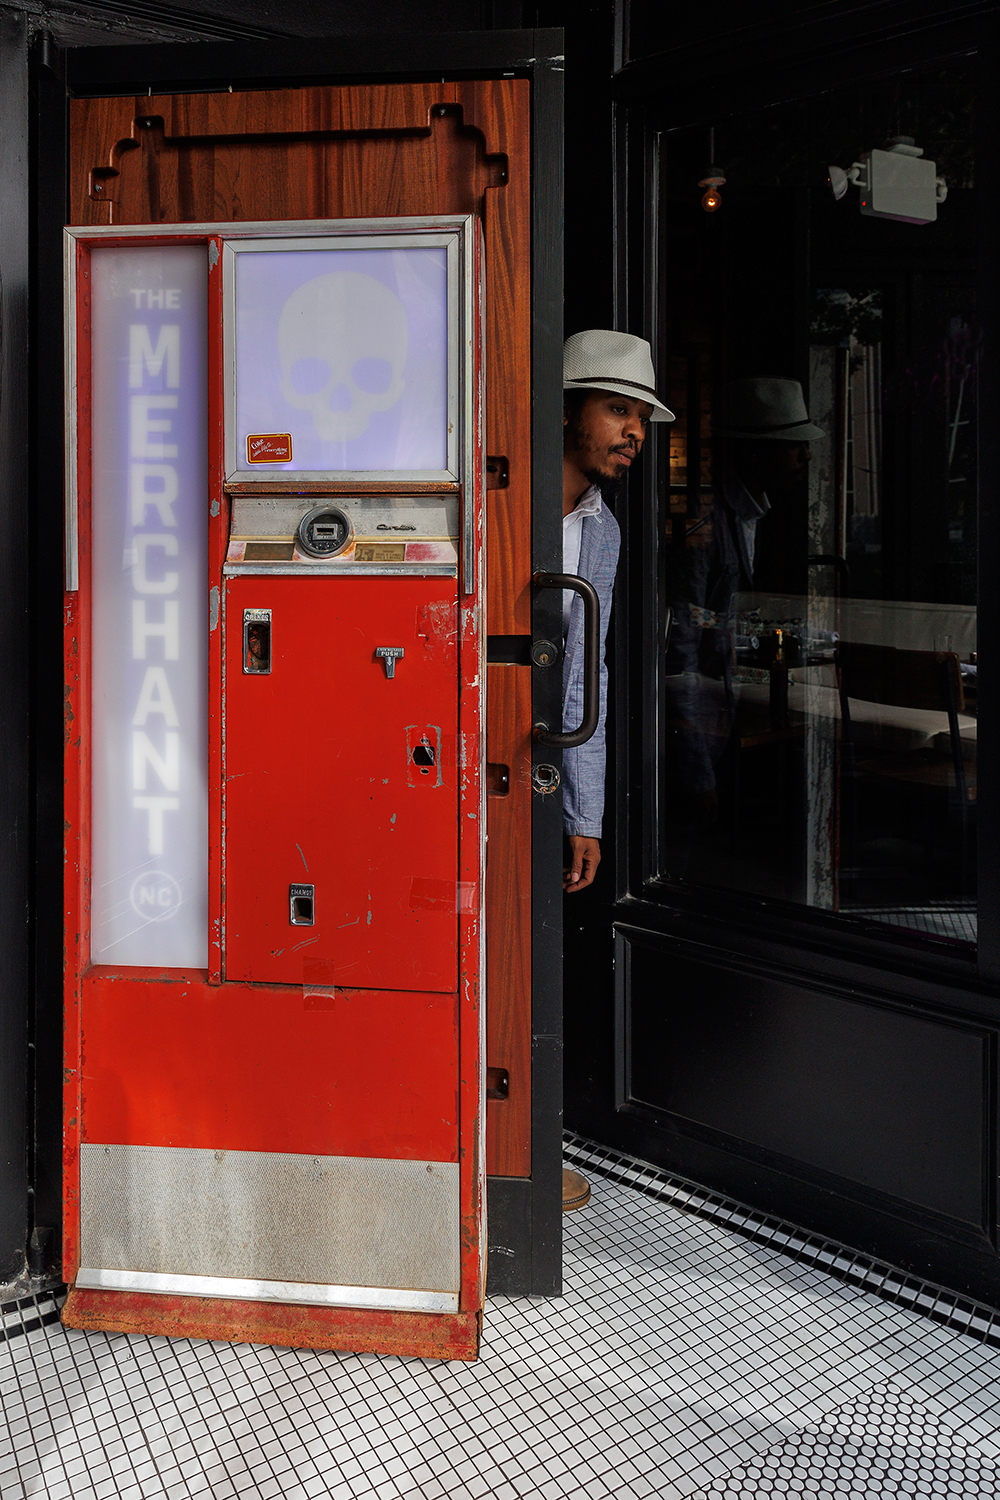 Guests enter the merchant through a secret door disguised as a vintage vending machine